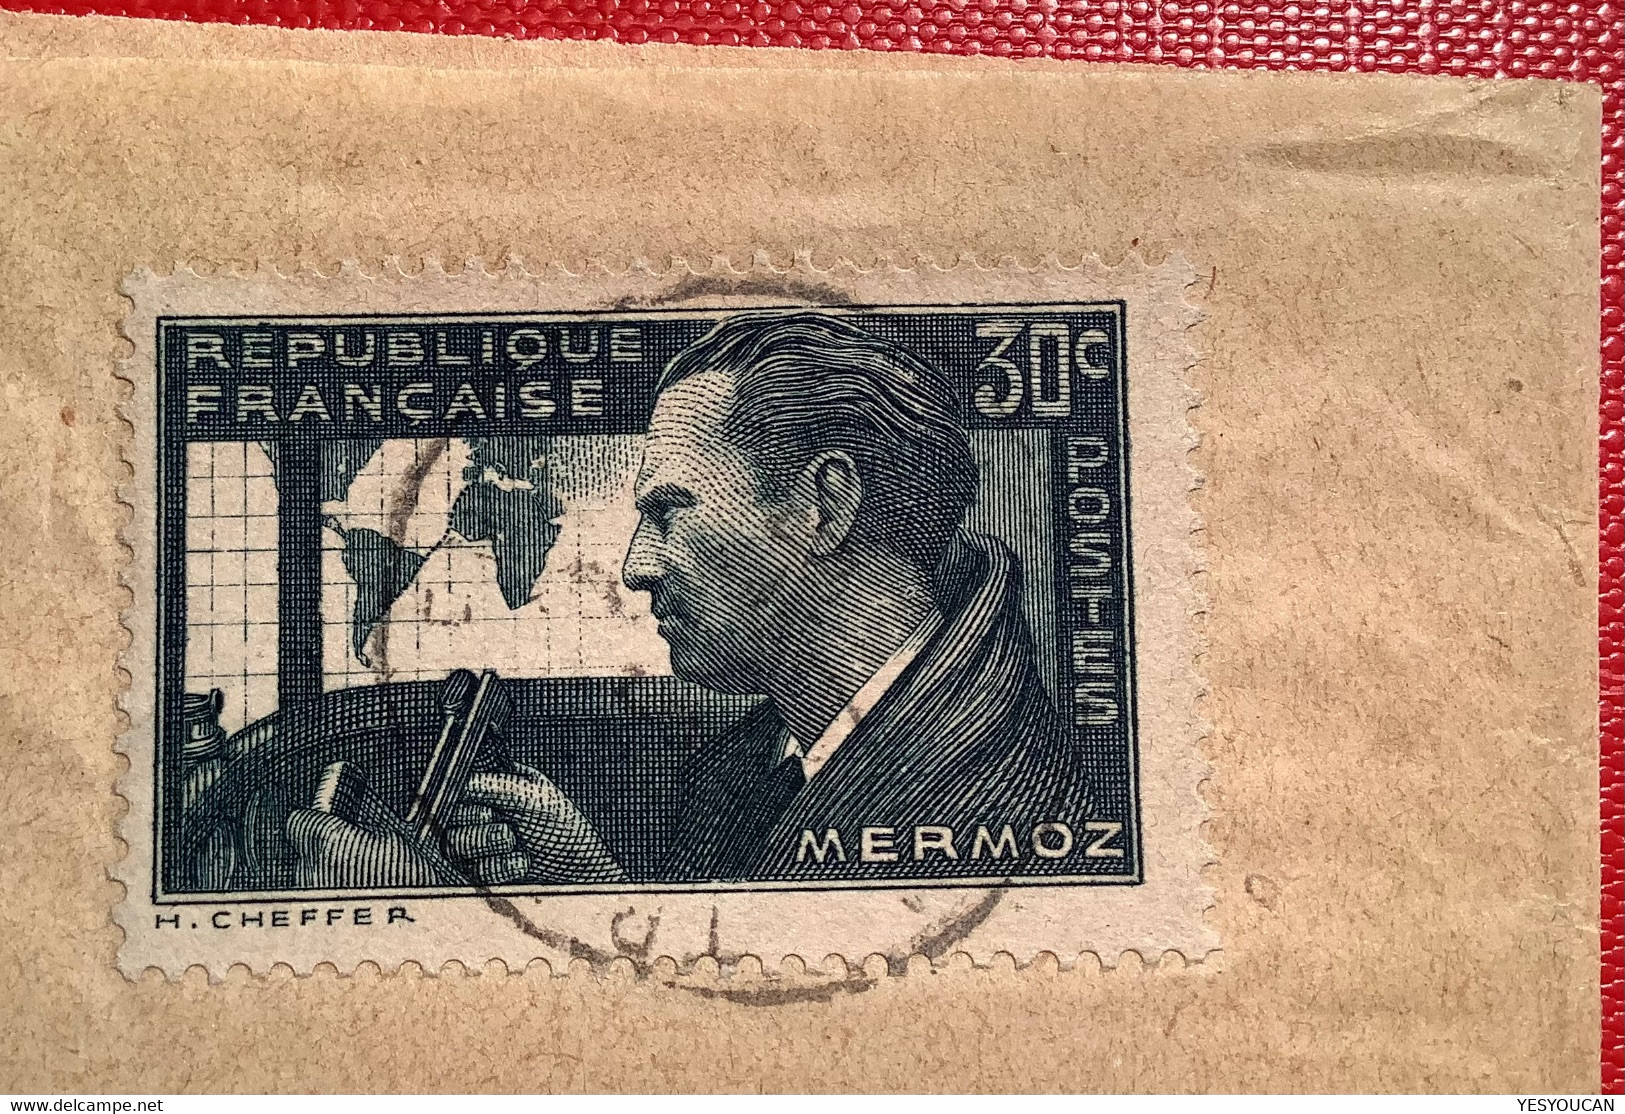 #337 30c Mermoz UTILISATION RARE Sur Bande Journal TRANS EN PROVENCE VAR 5.9.1937>Neuchatel Suisse (France Lettre - Cartas & Documentos